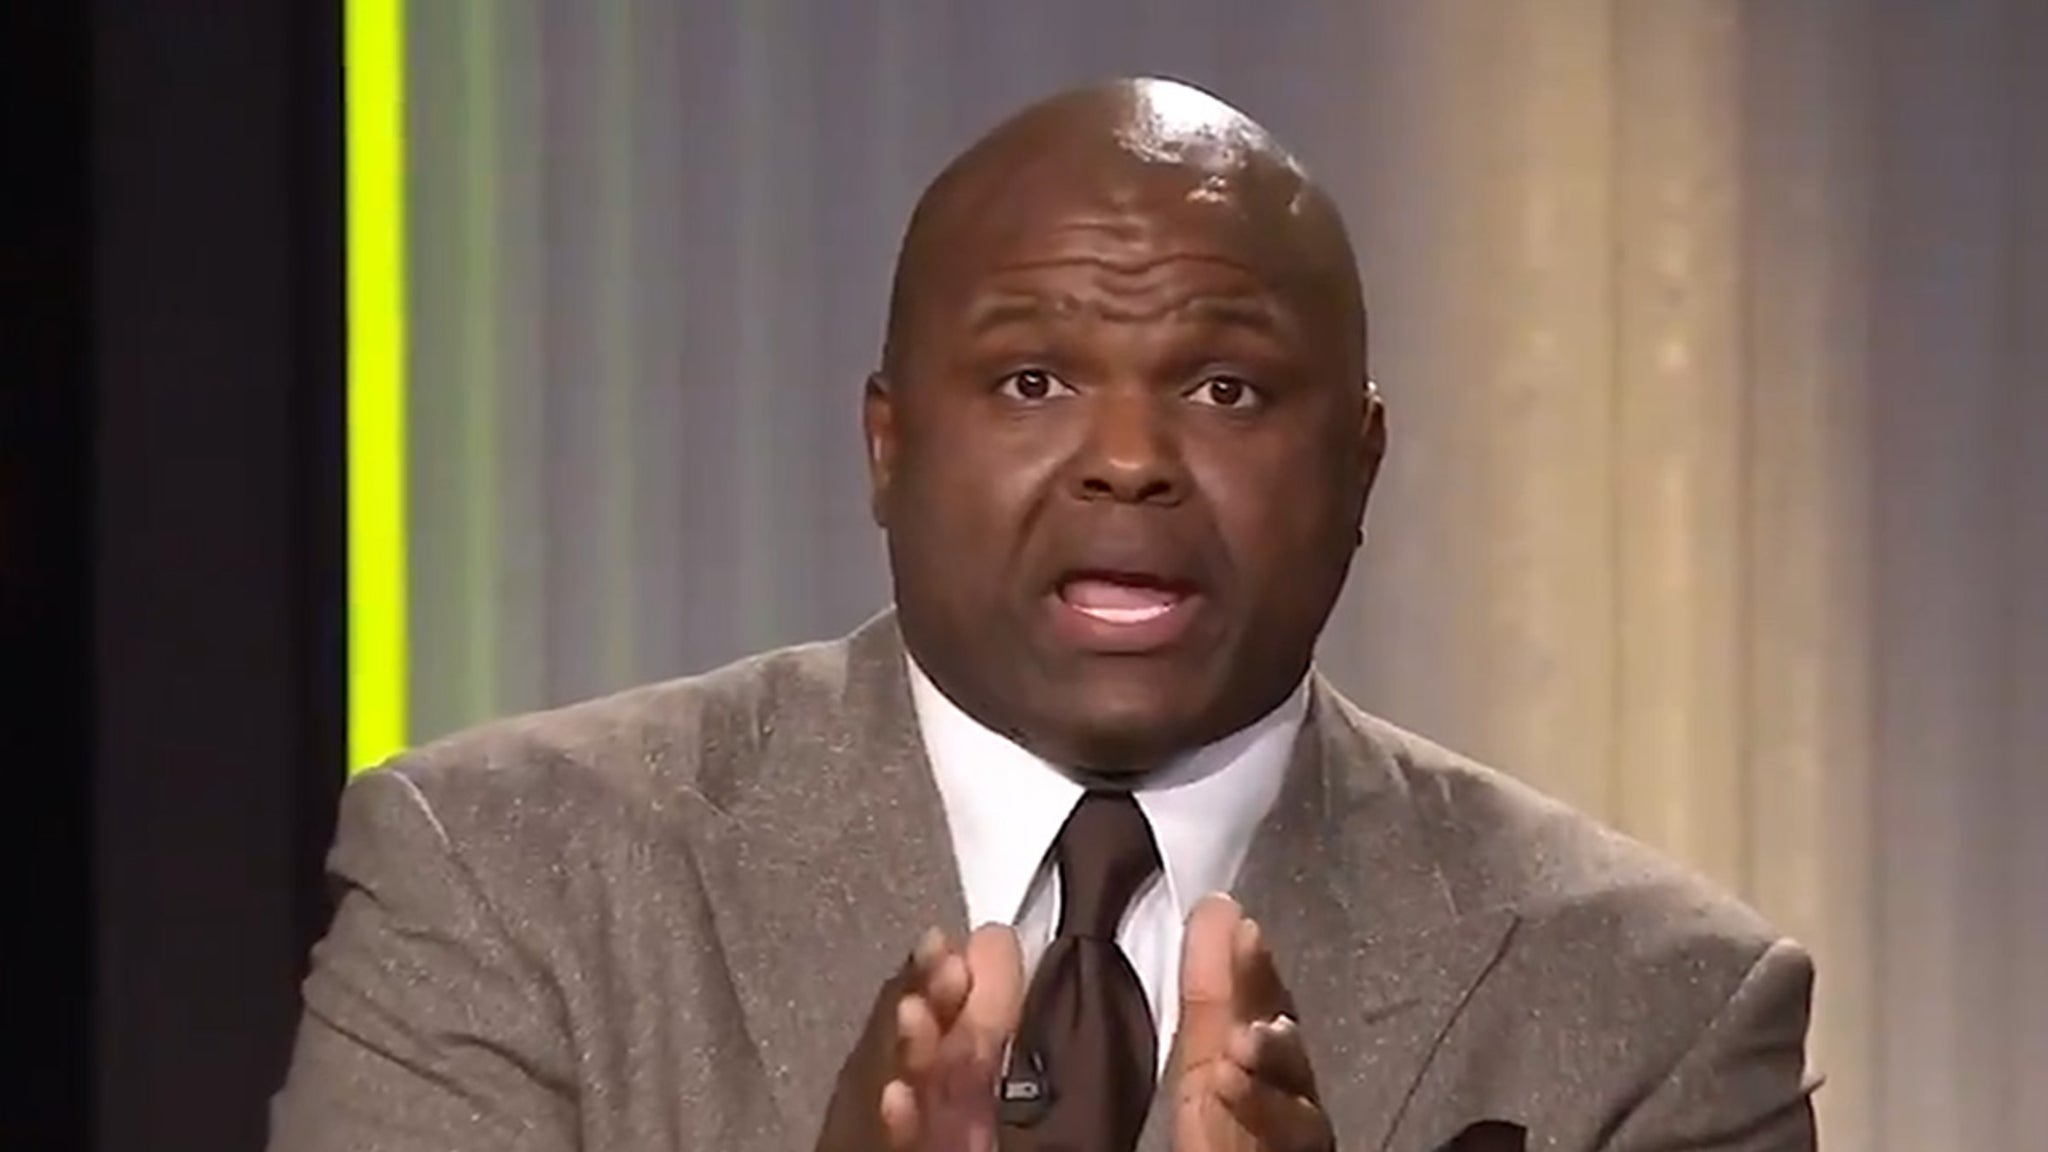 ESPN’s Booger McFarland calls black NFL stars for focus on brand, not game